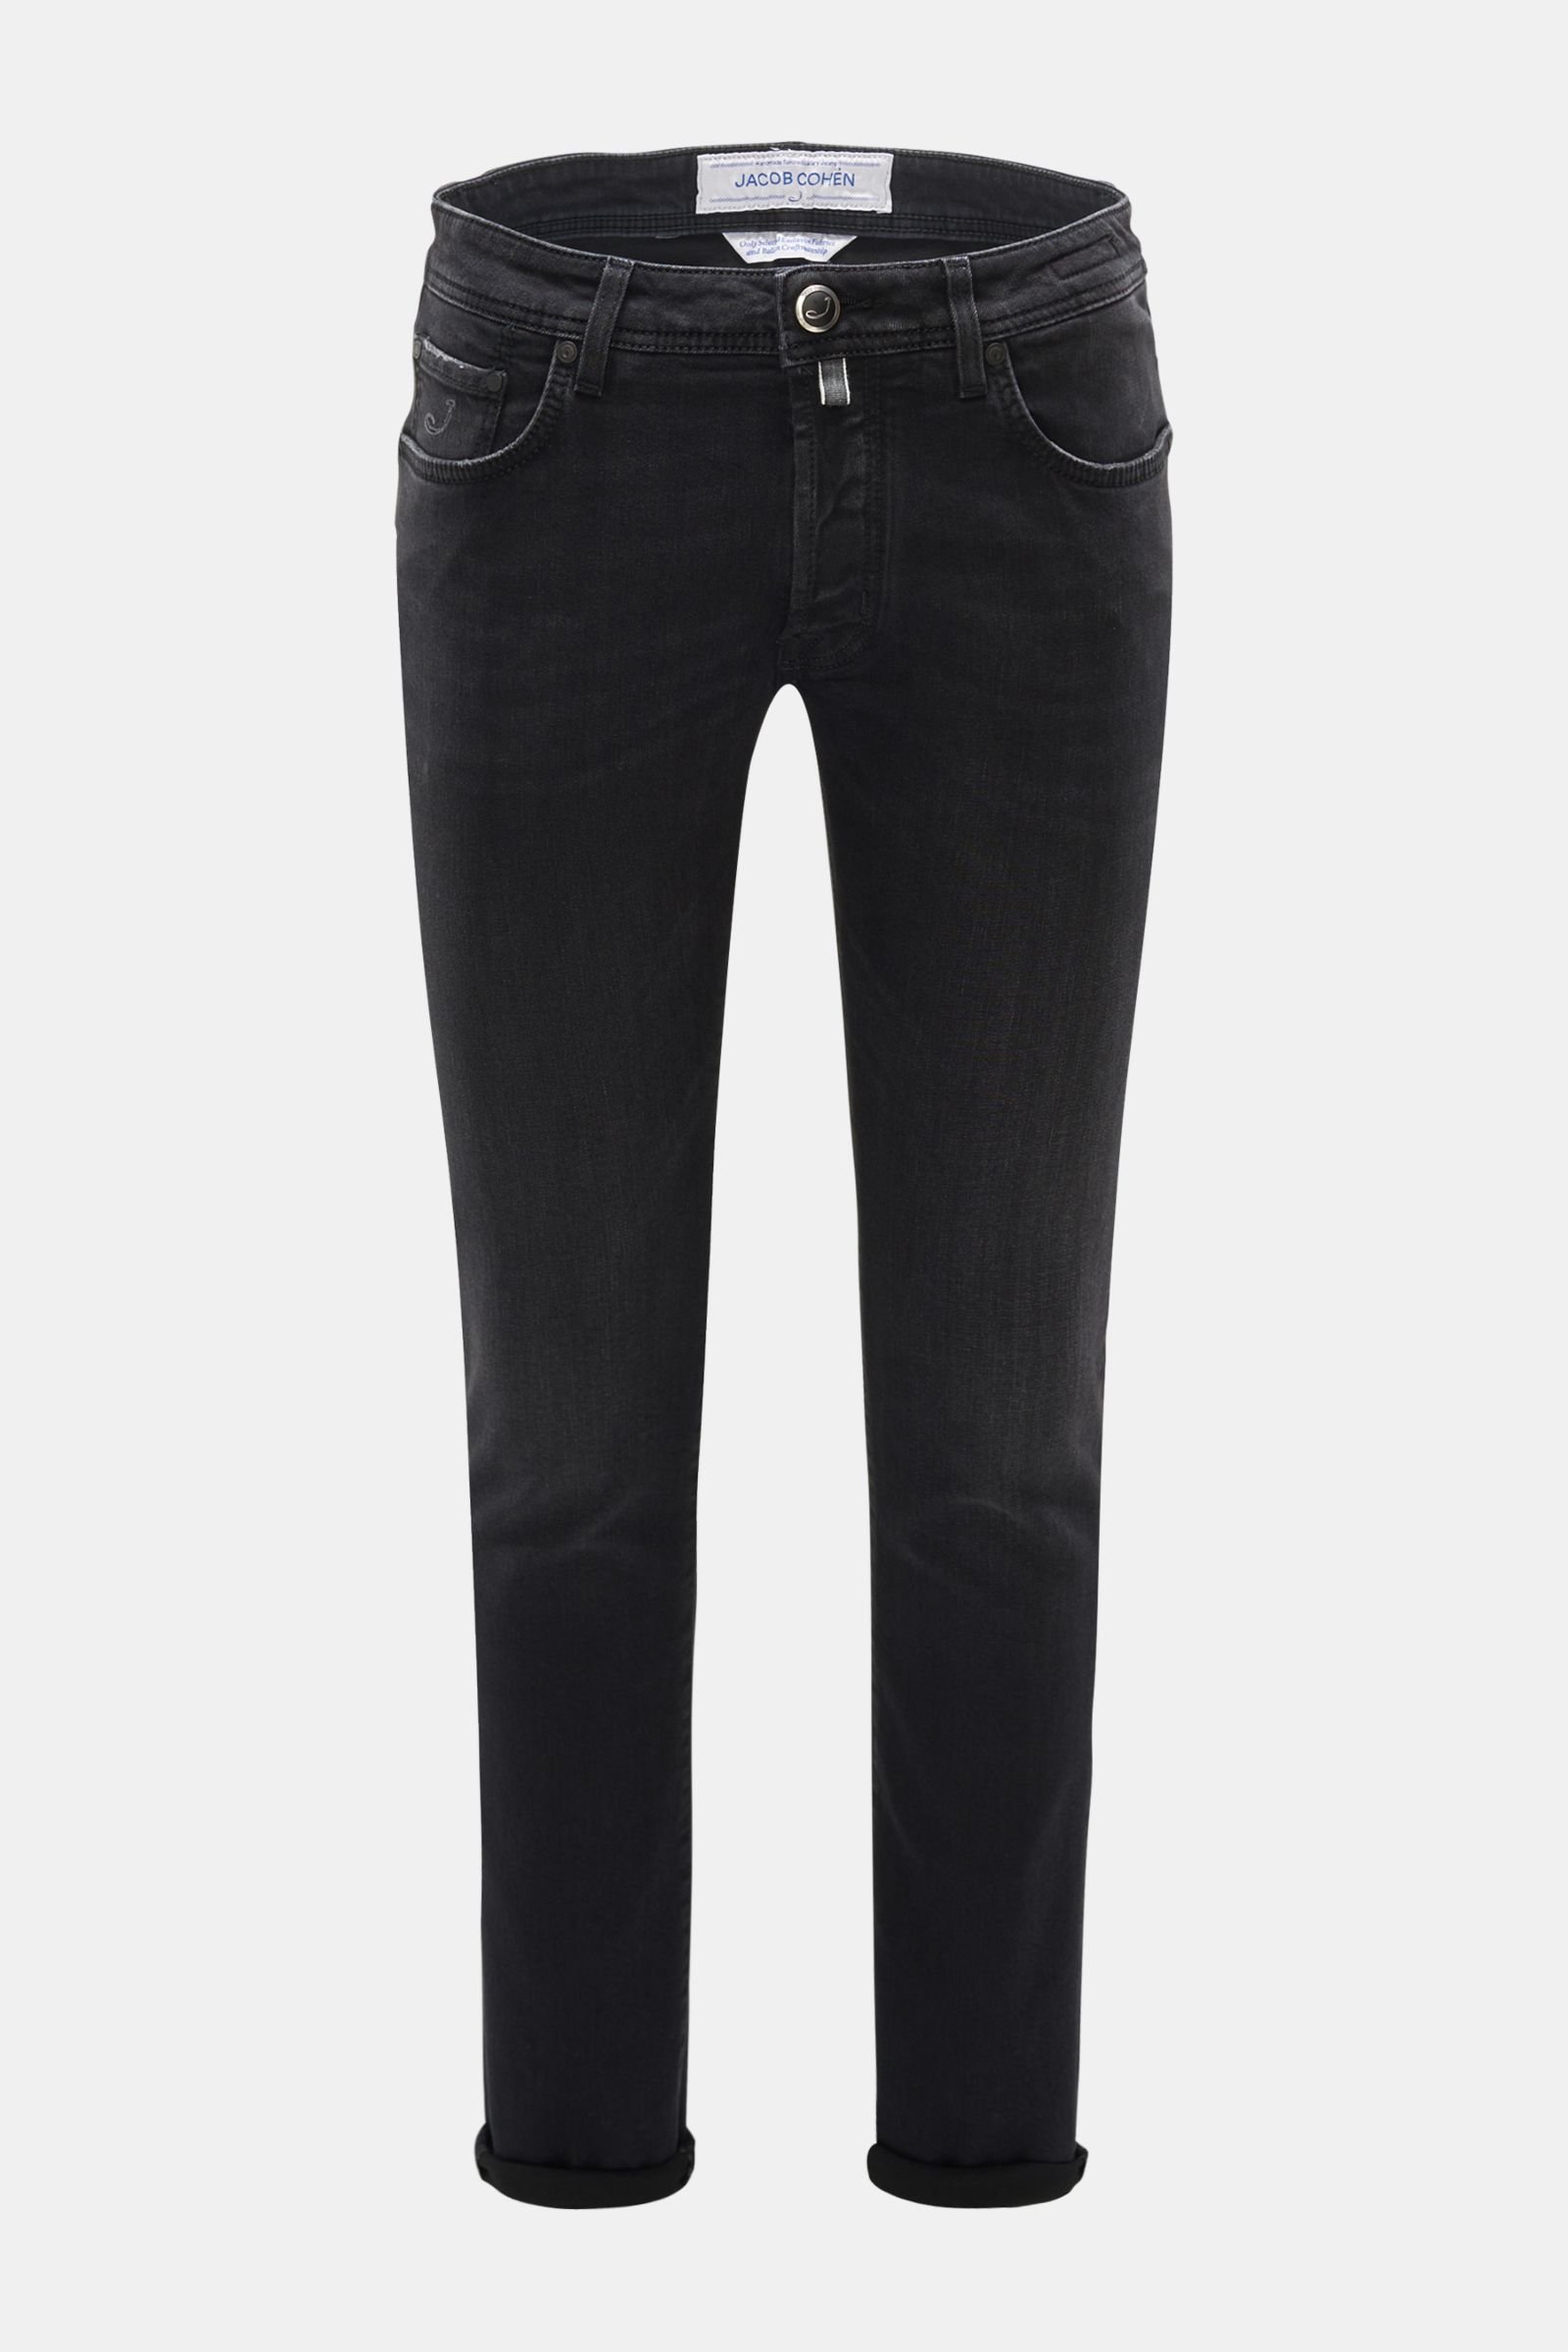 Jeans 'J688 Comfort Slim Fit' schwarz